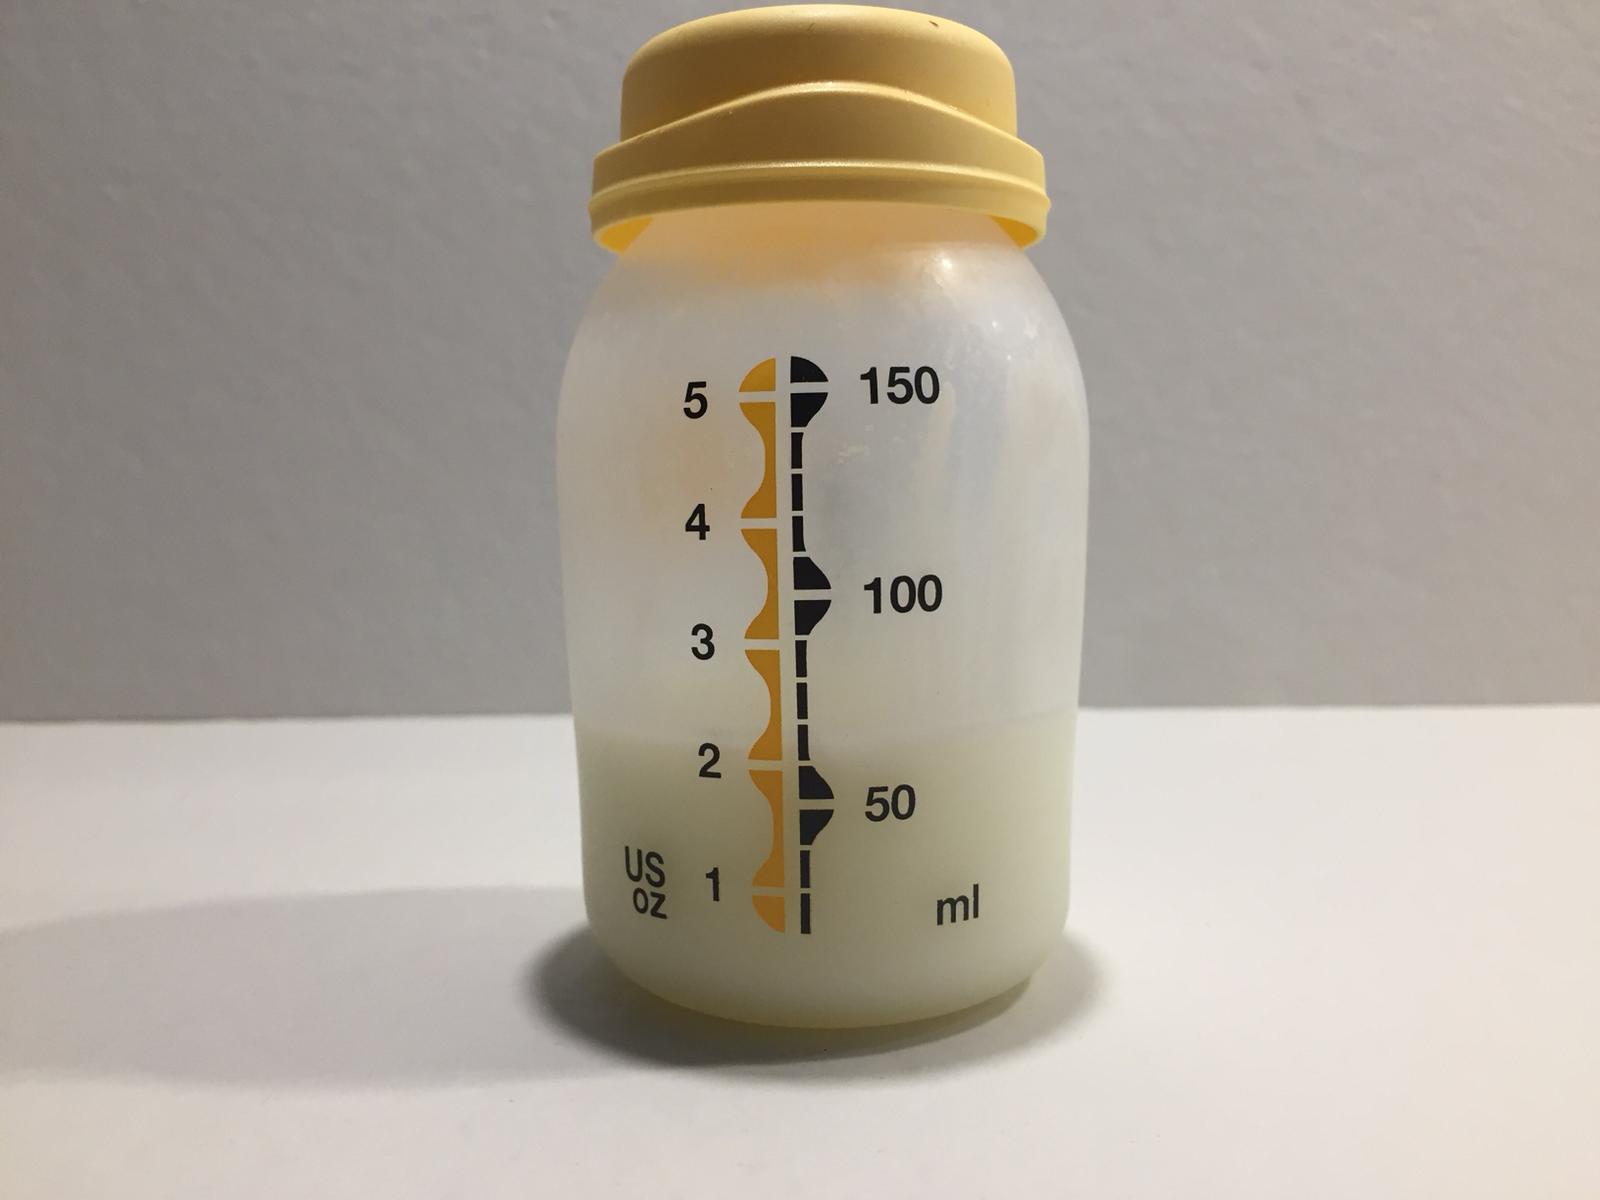 Cómo transportar la leche materna extraida? – Maternidad Continuum